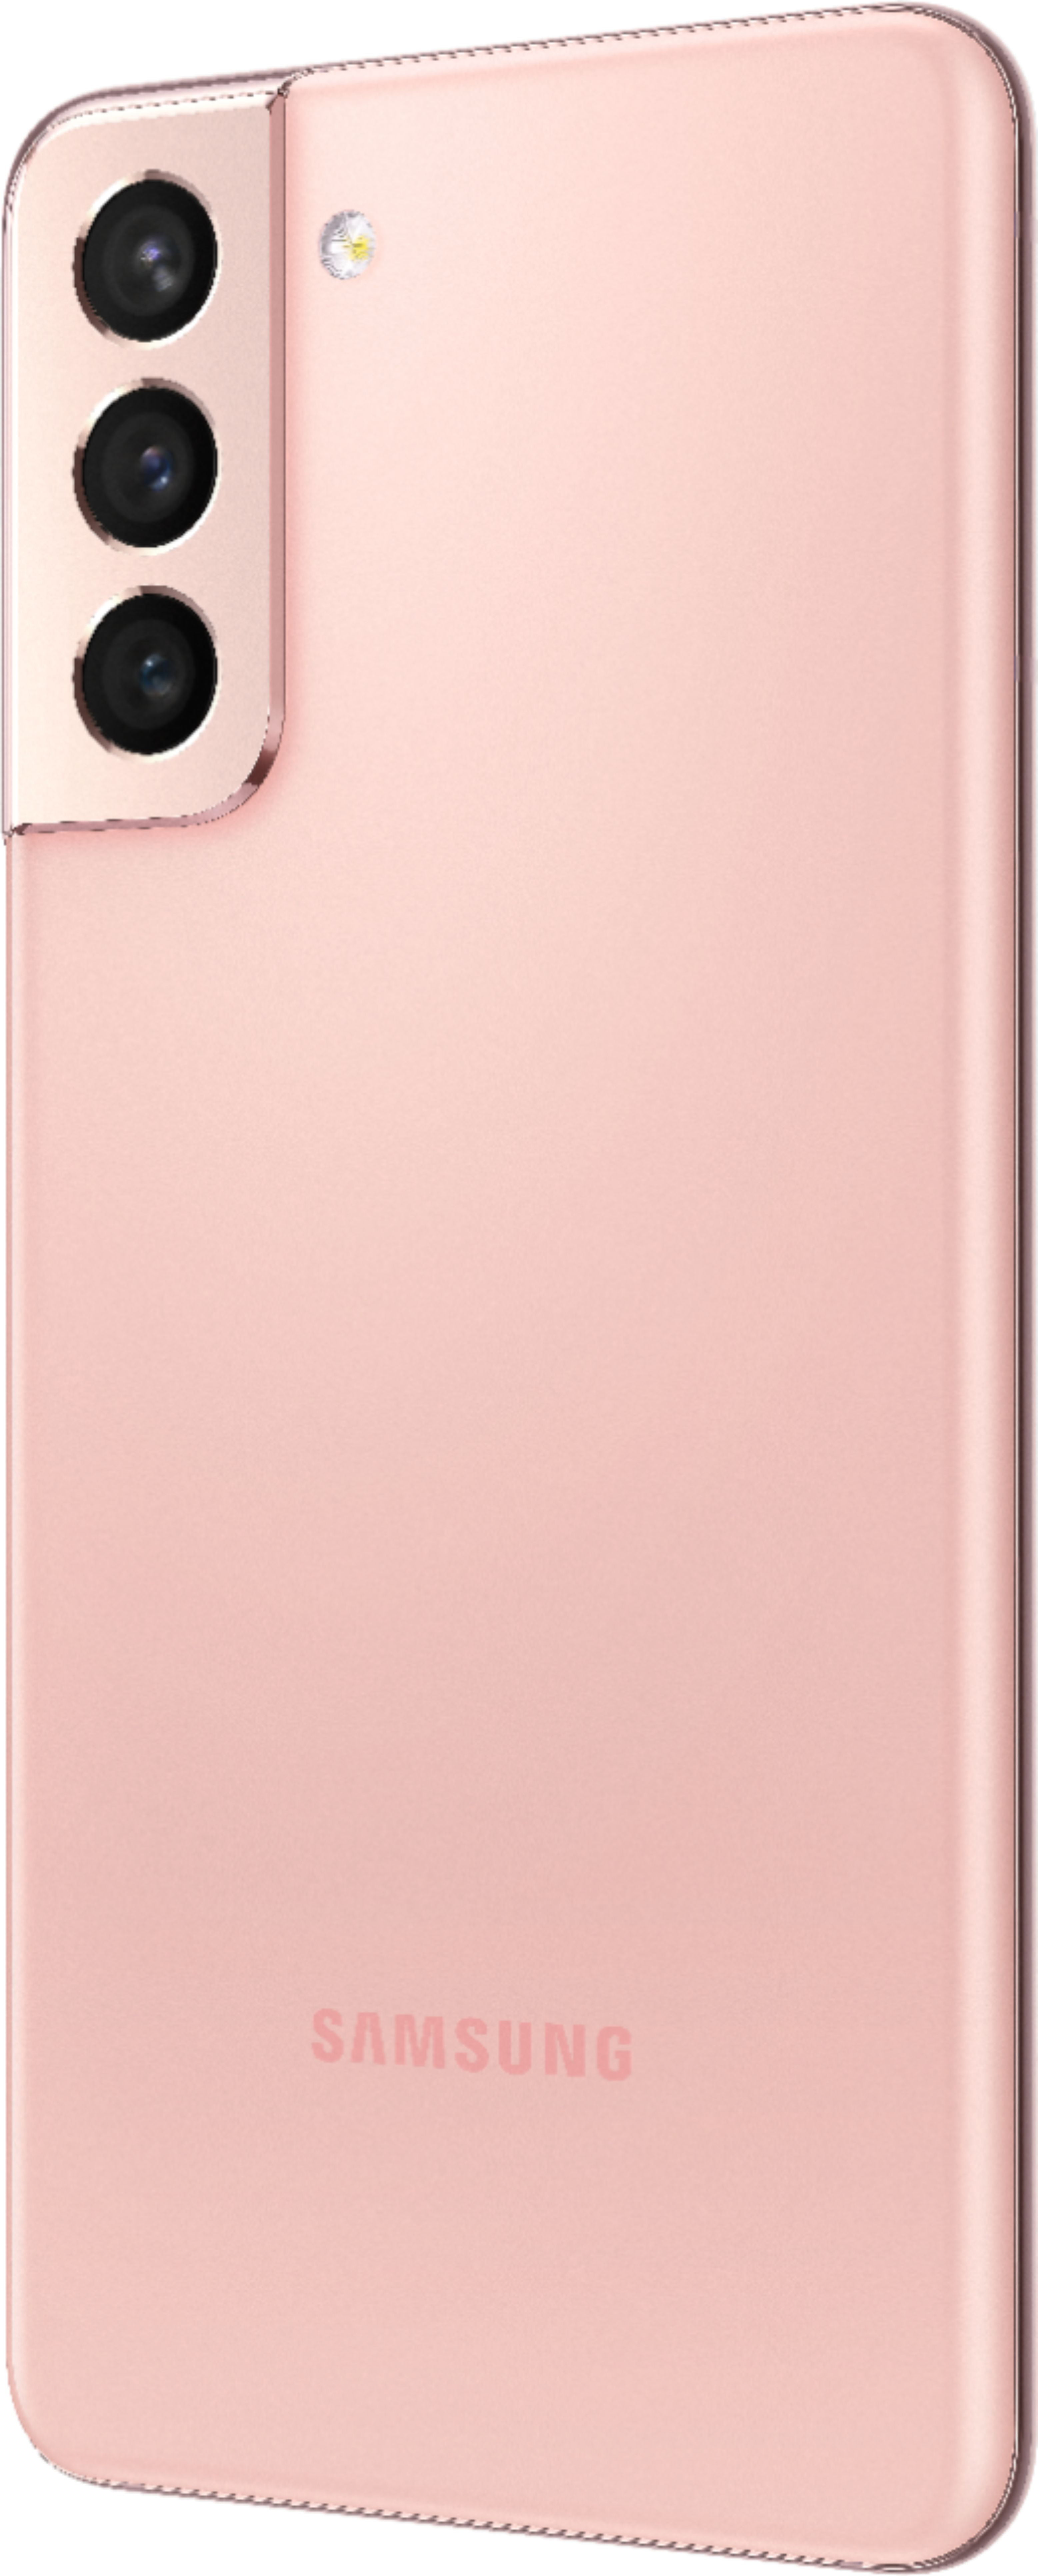 Samsung Galaxy S21 5G G991B 128GB Dual Sim GSM Unlocked Android Smartphone  (International Variant/US Compatible LTE) - Phantom Pink